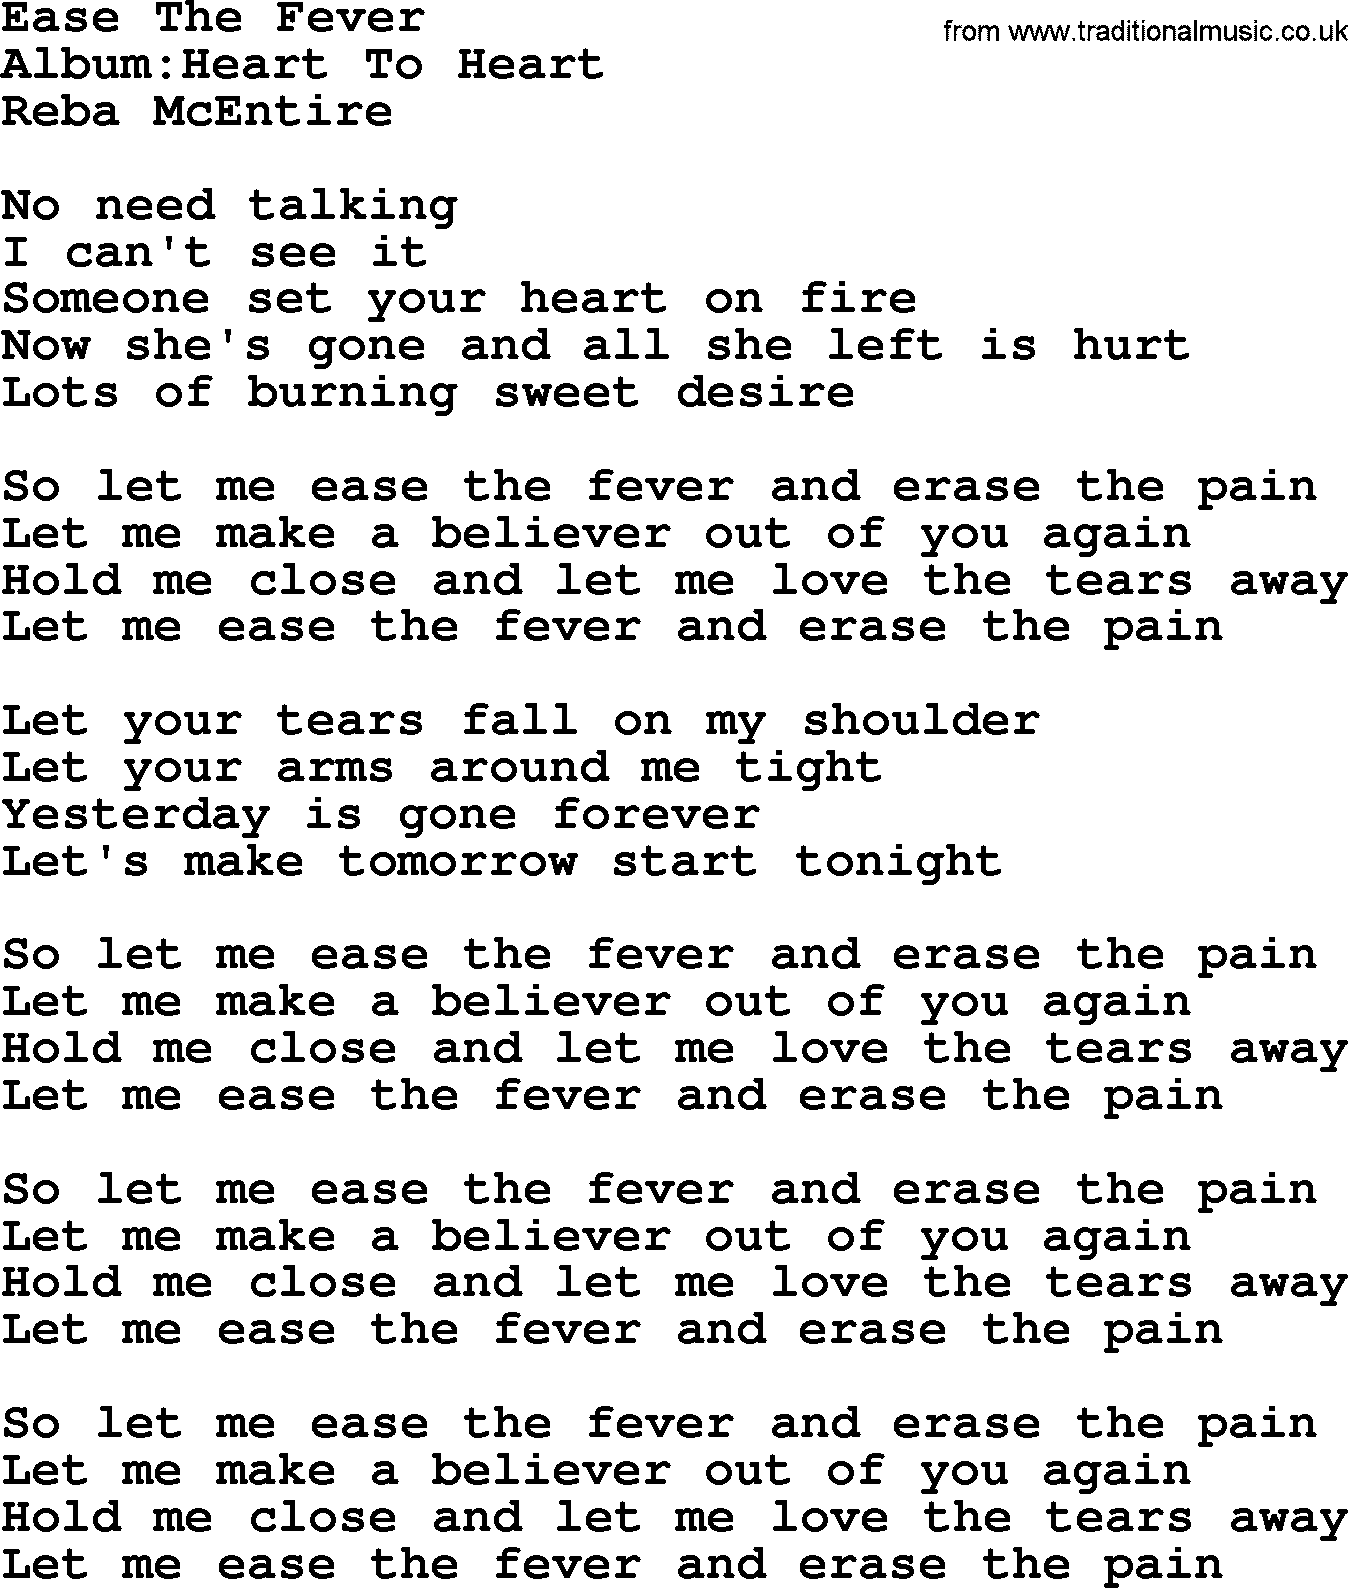 Reba McEntire song: Ease The Fever lyrics